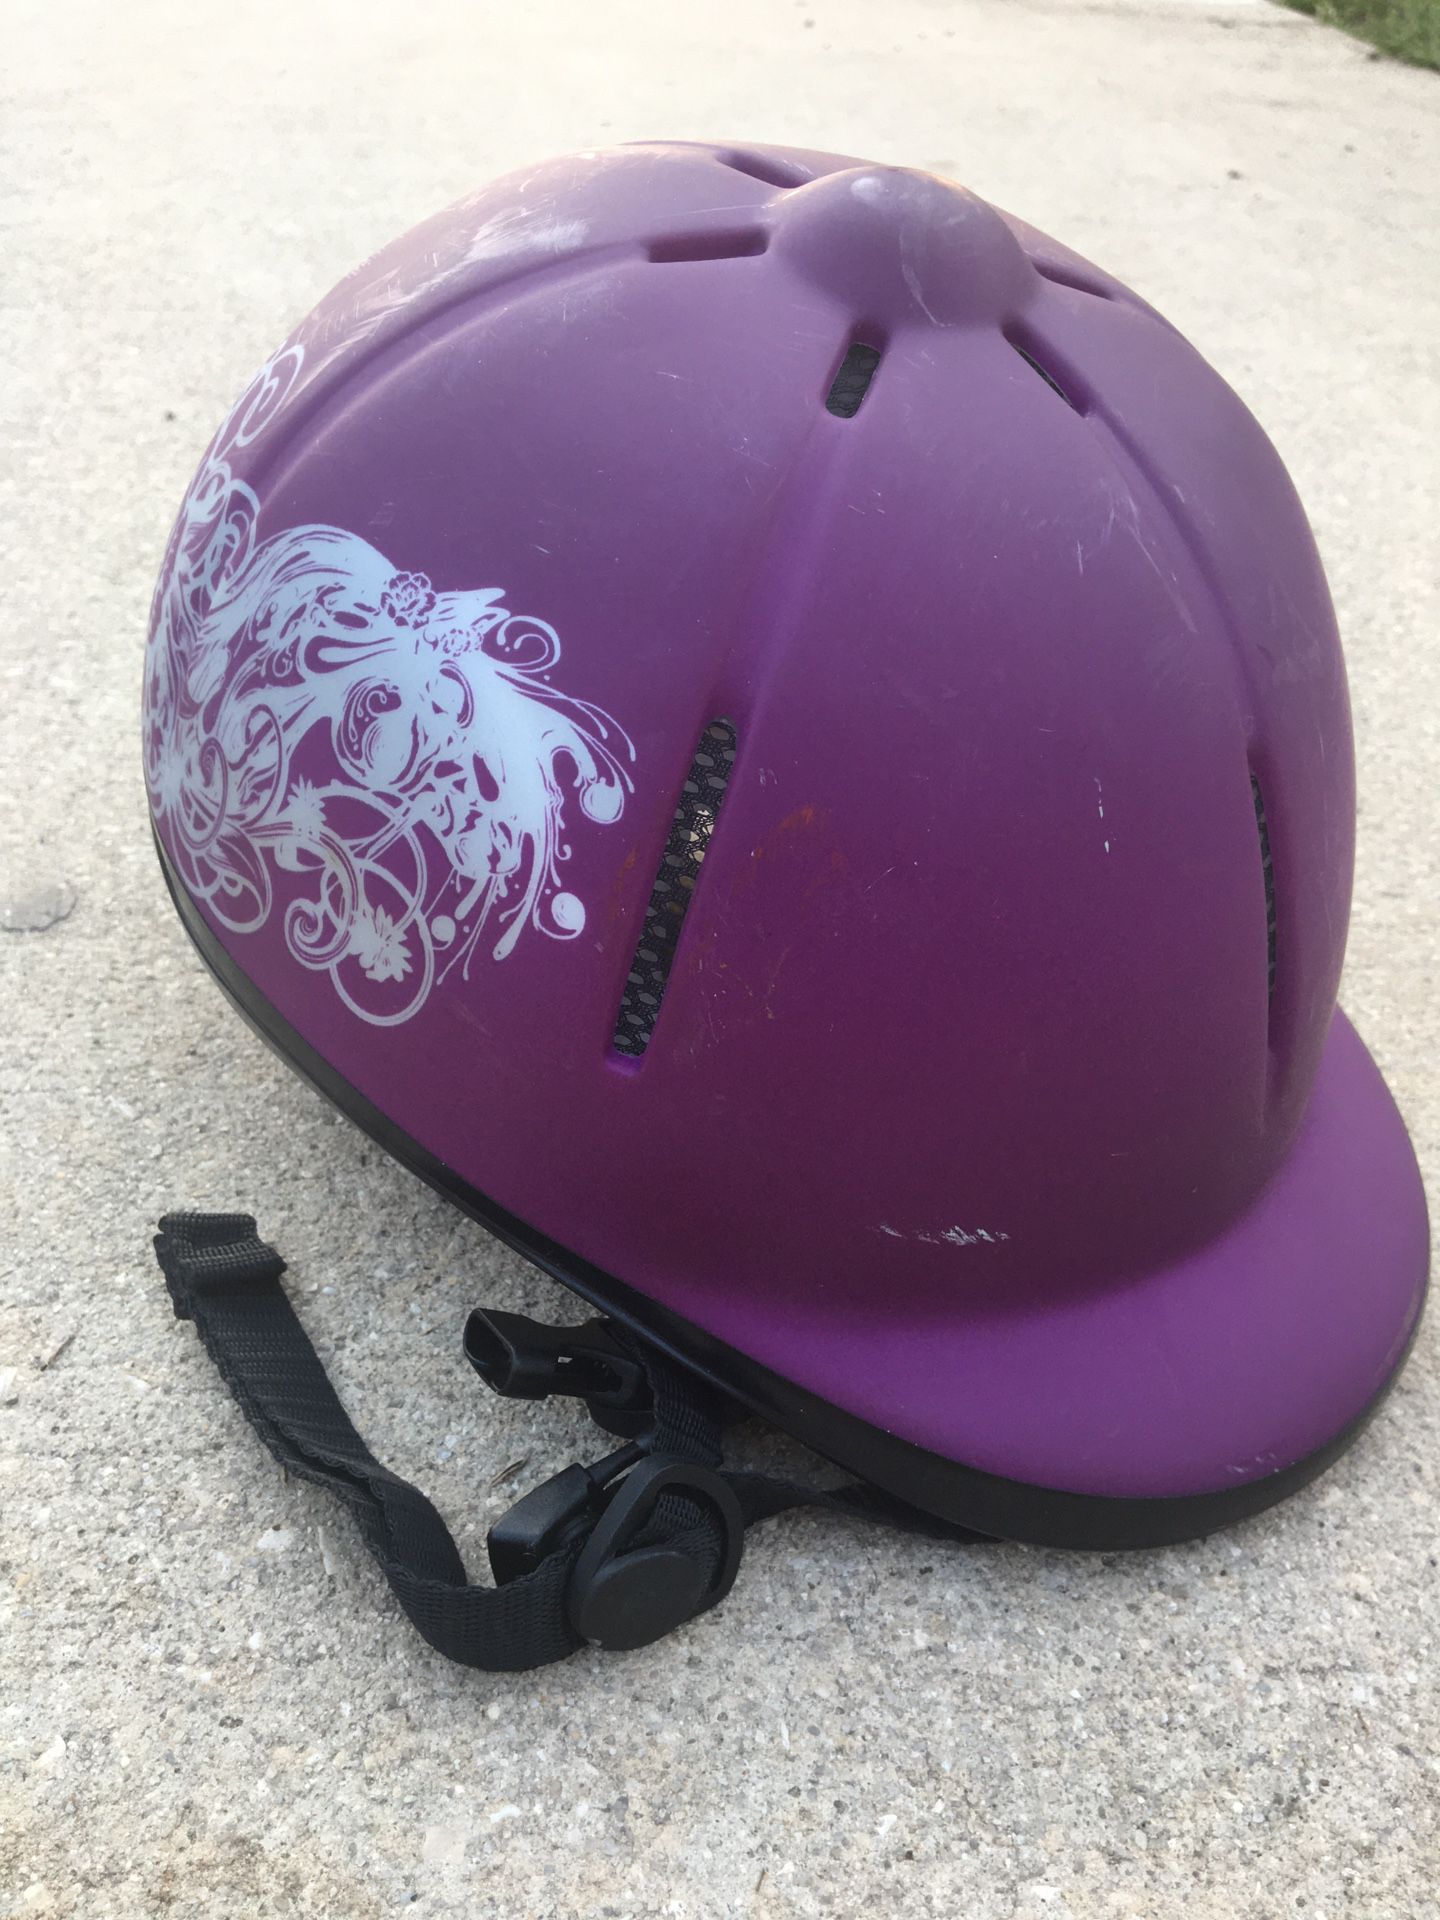 KidZamo Helmet (horse riding helmet)